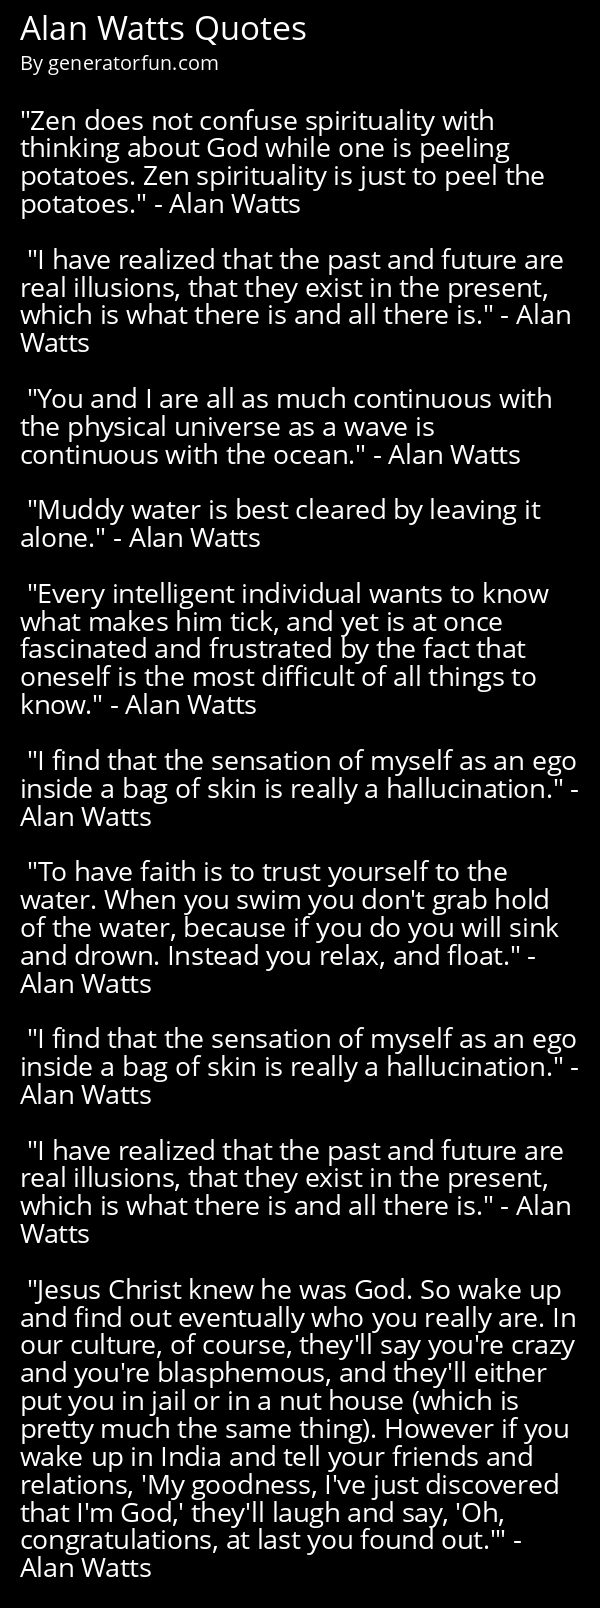 Alan Watts Quotes